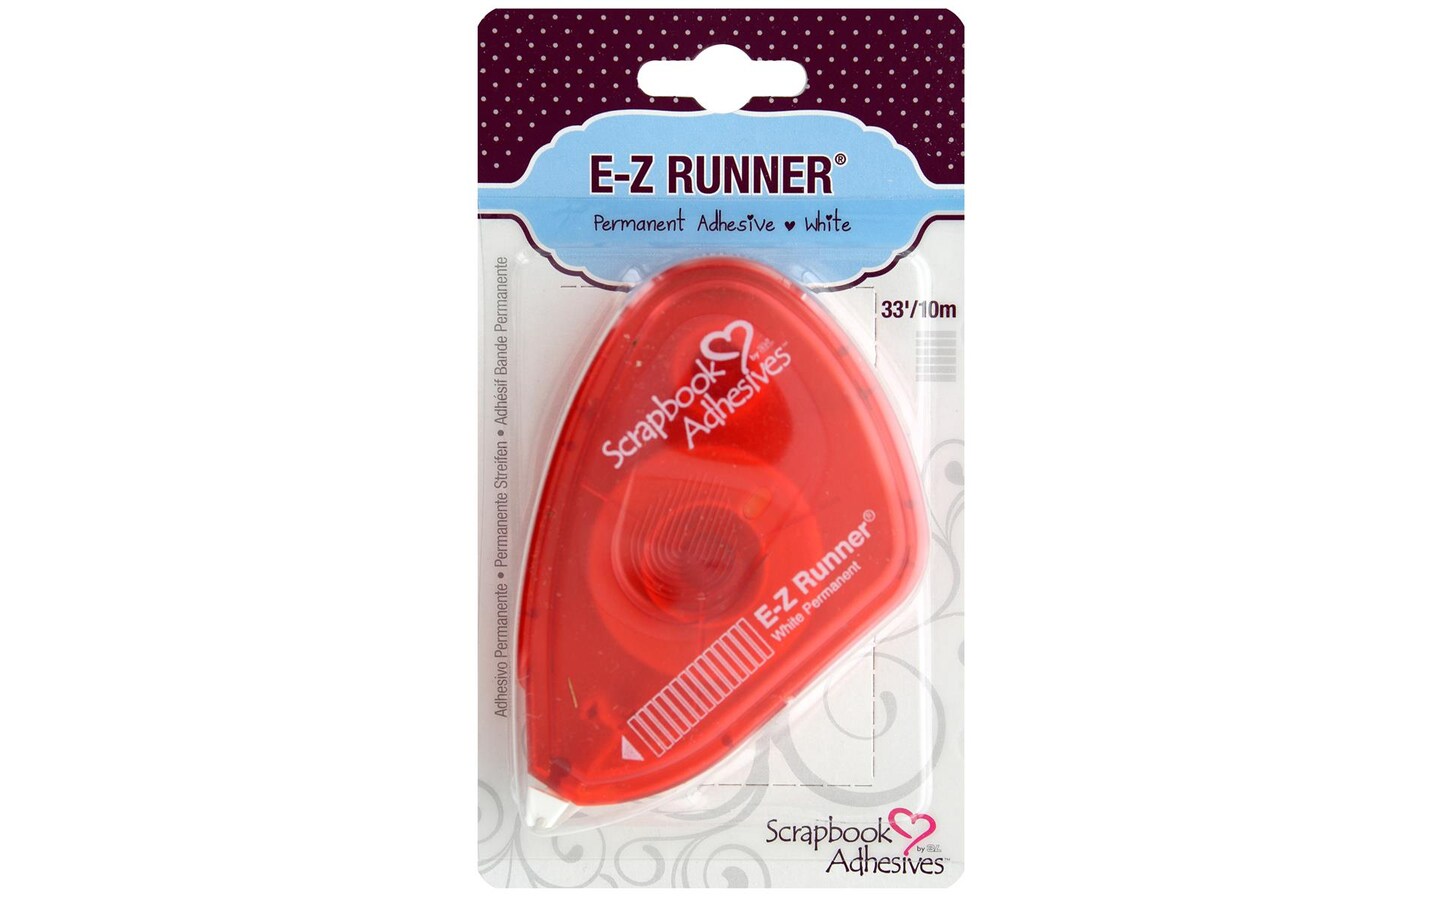 Scrapbook Adhesives E-Z Runners